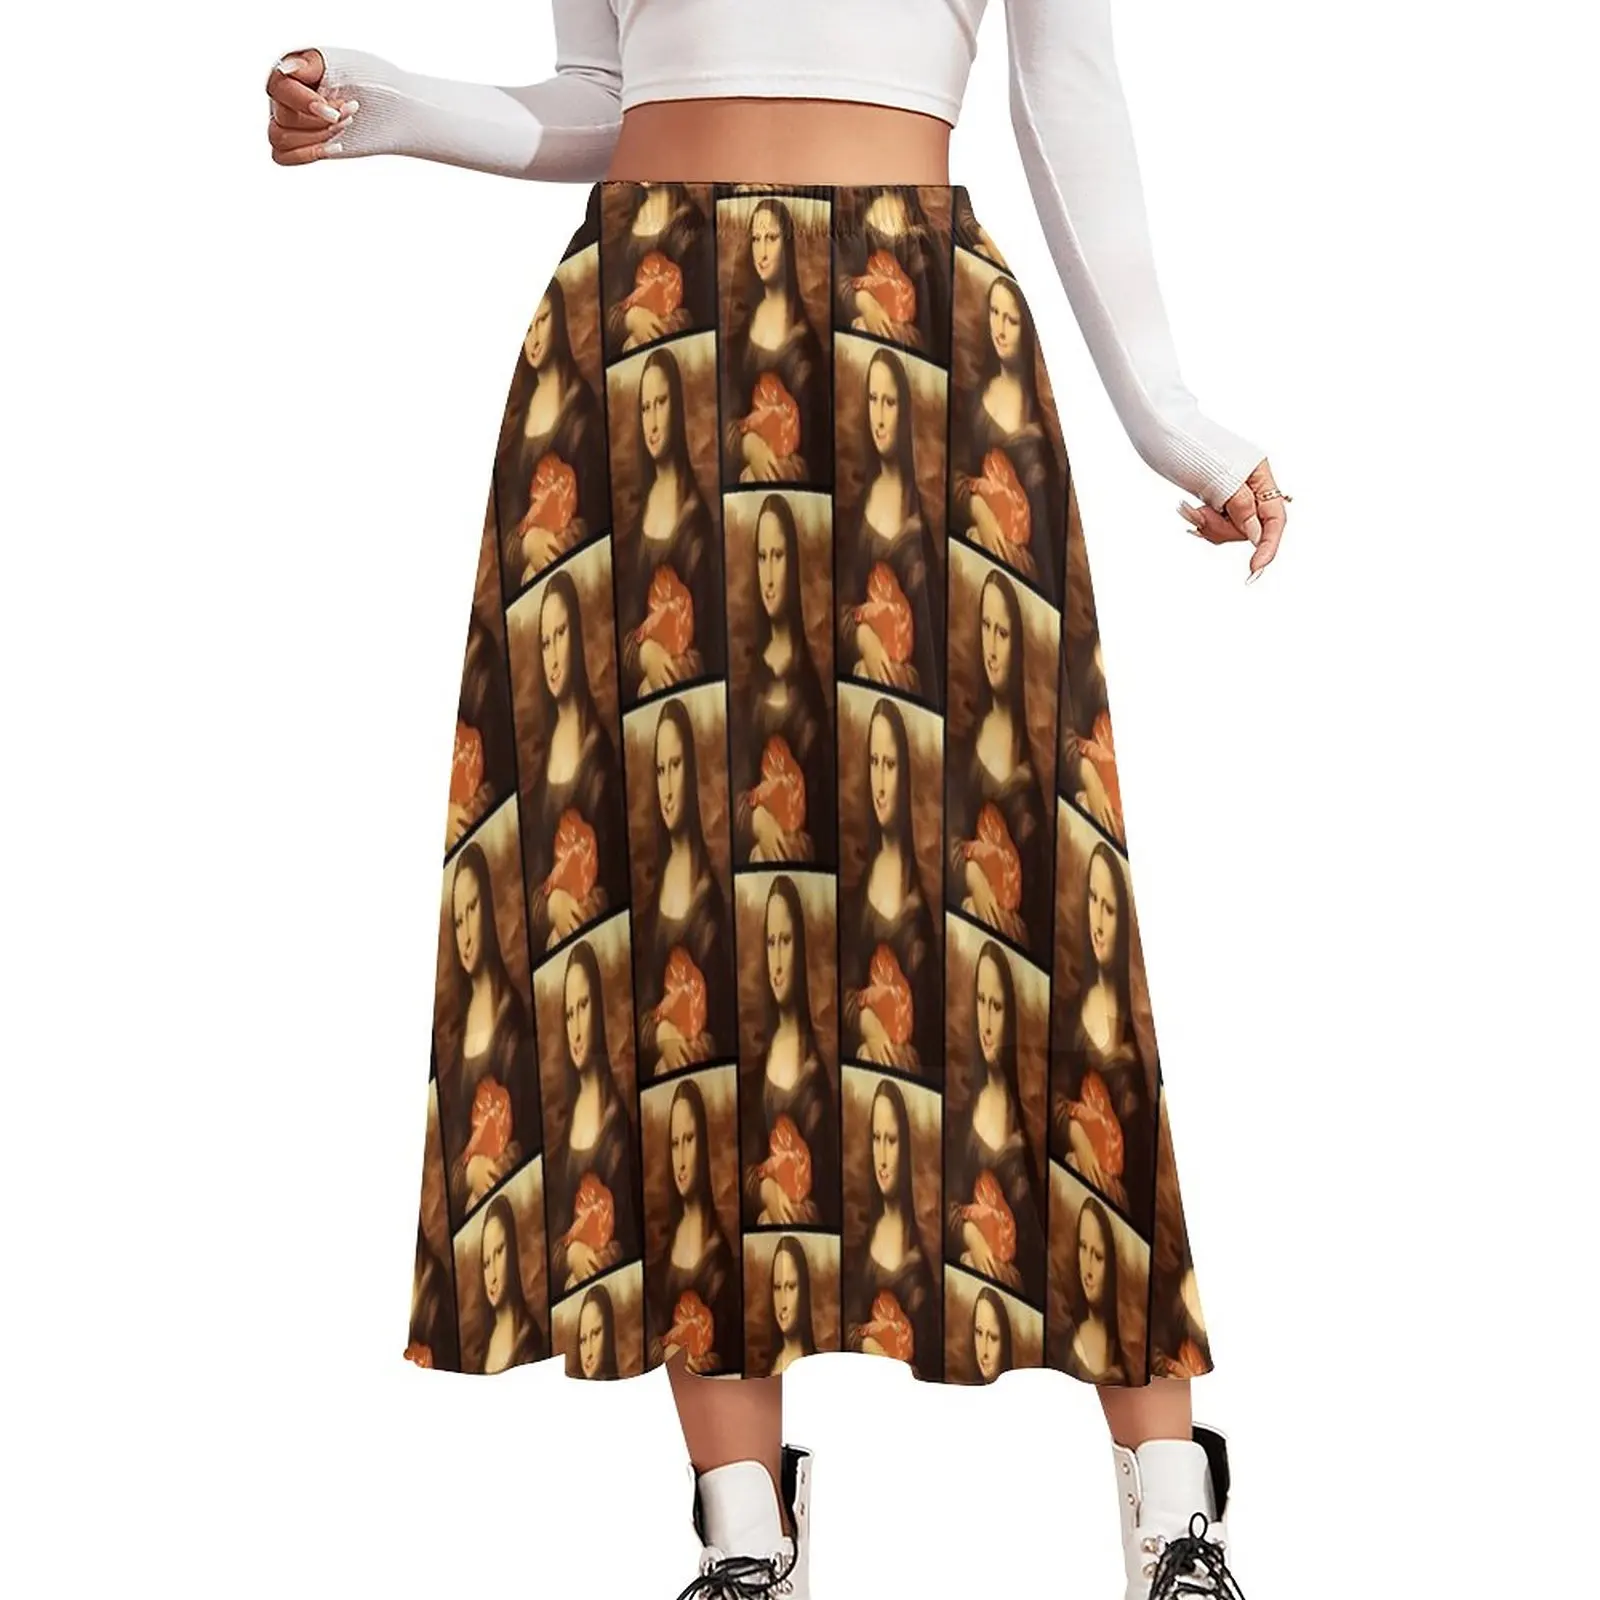 

Mona Lisa Loves Chiffon Skirt Valentine Candy Street Wear Long Skirts Female Beach Boho Skirt Design Clothing Gift Idea